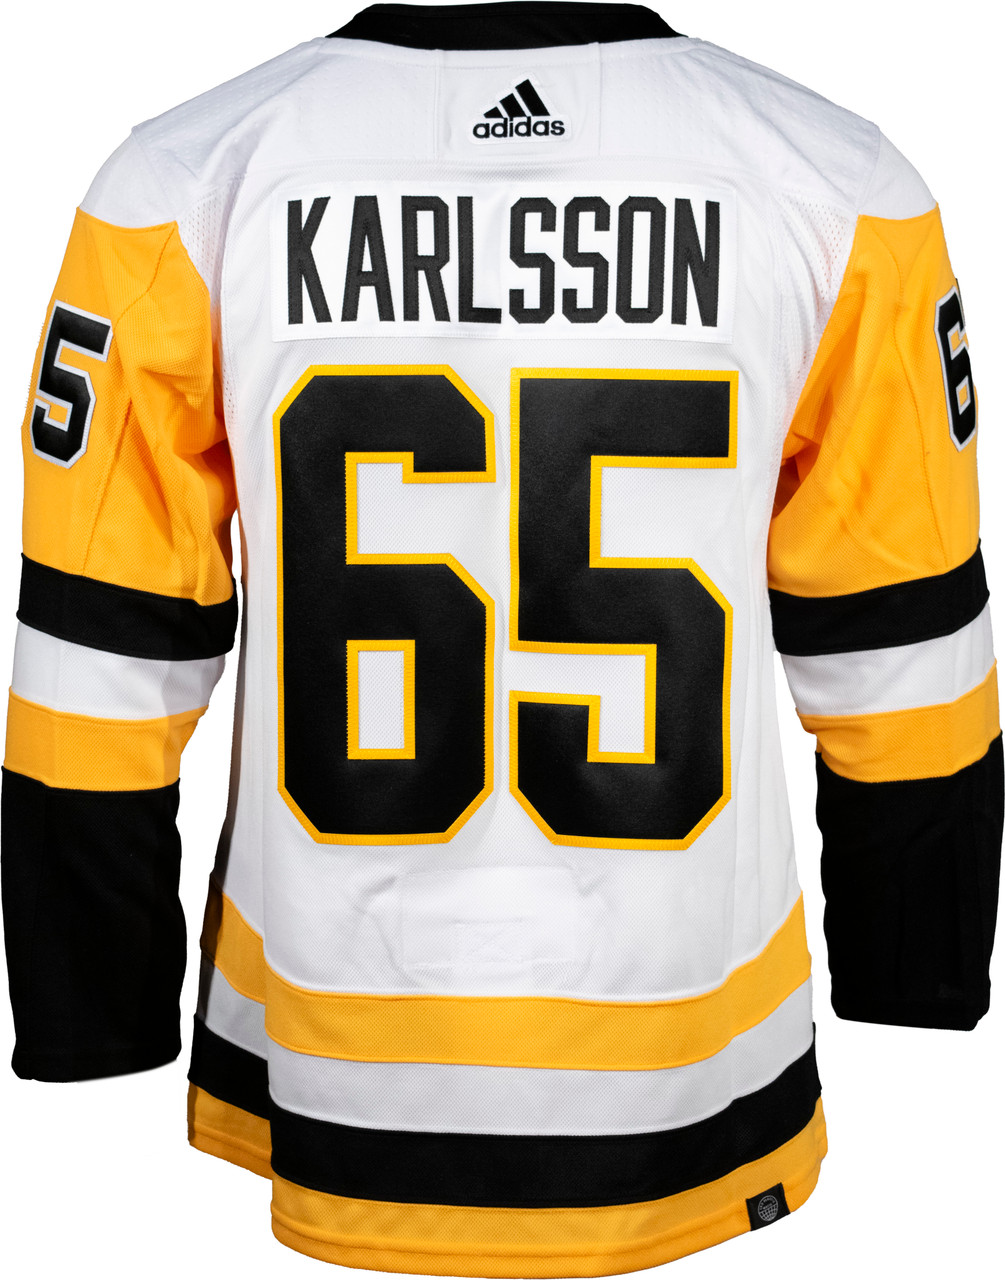 Pittsburgh Penguins Ladies Replica Erik Karlsson Alternate Jersey